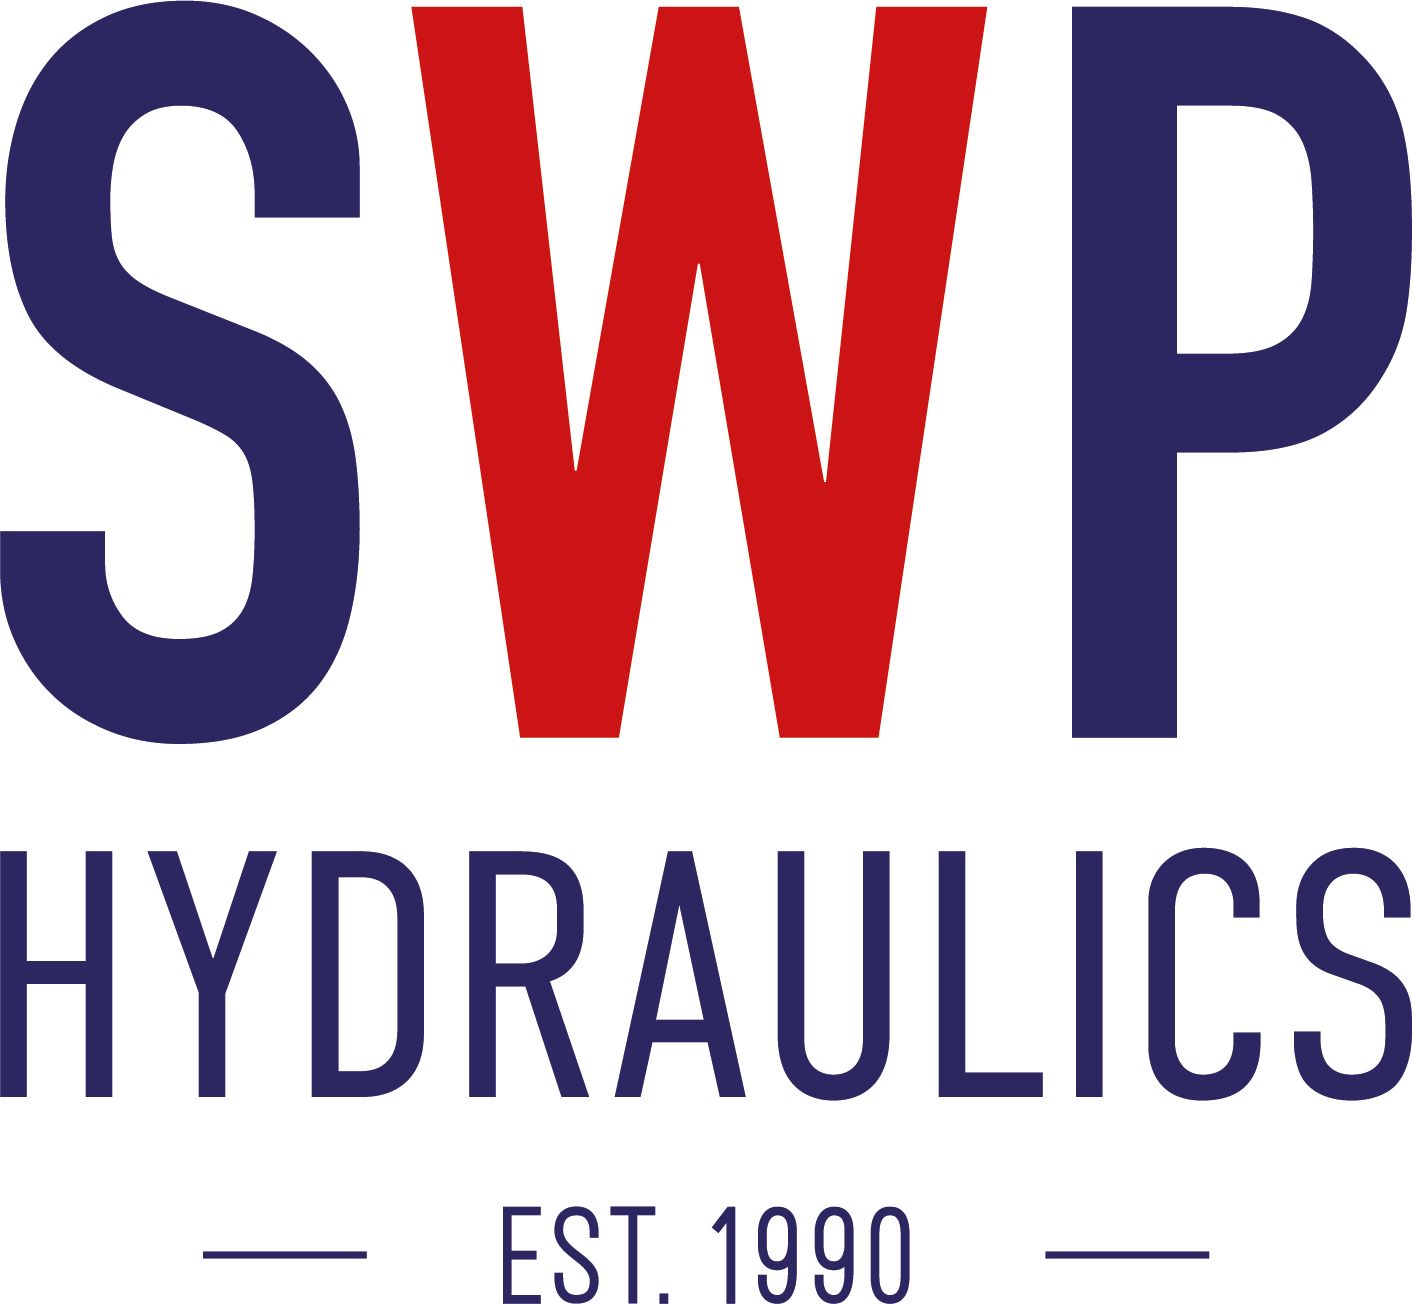 SWP Hydraulics